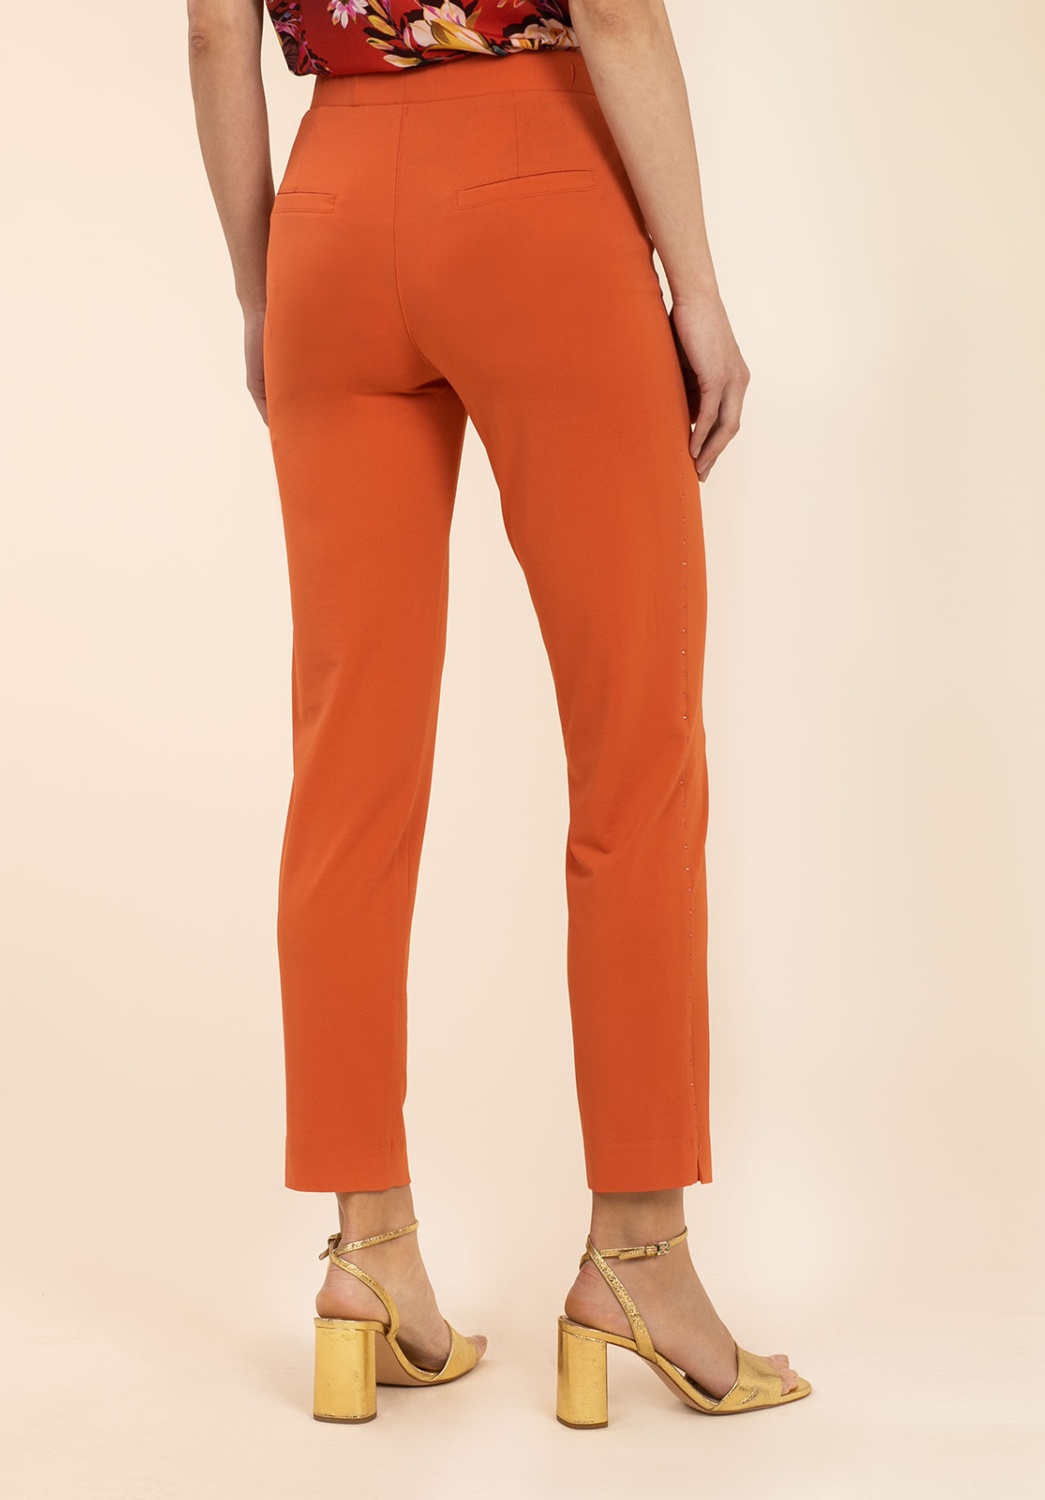 Pantalon orange à strass 3